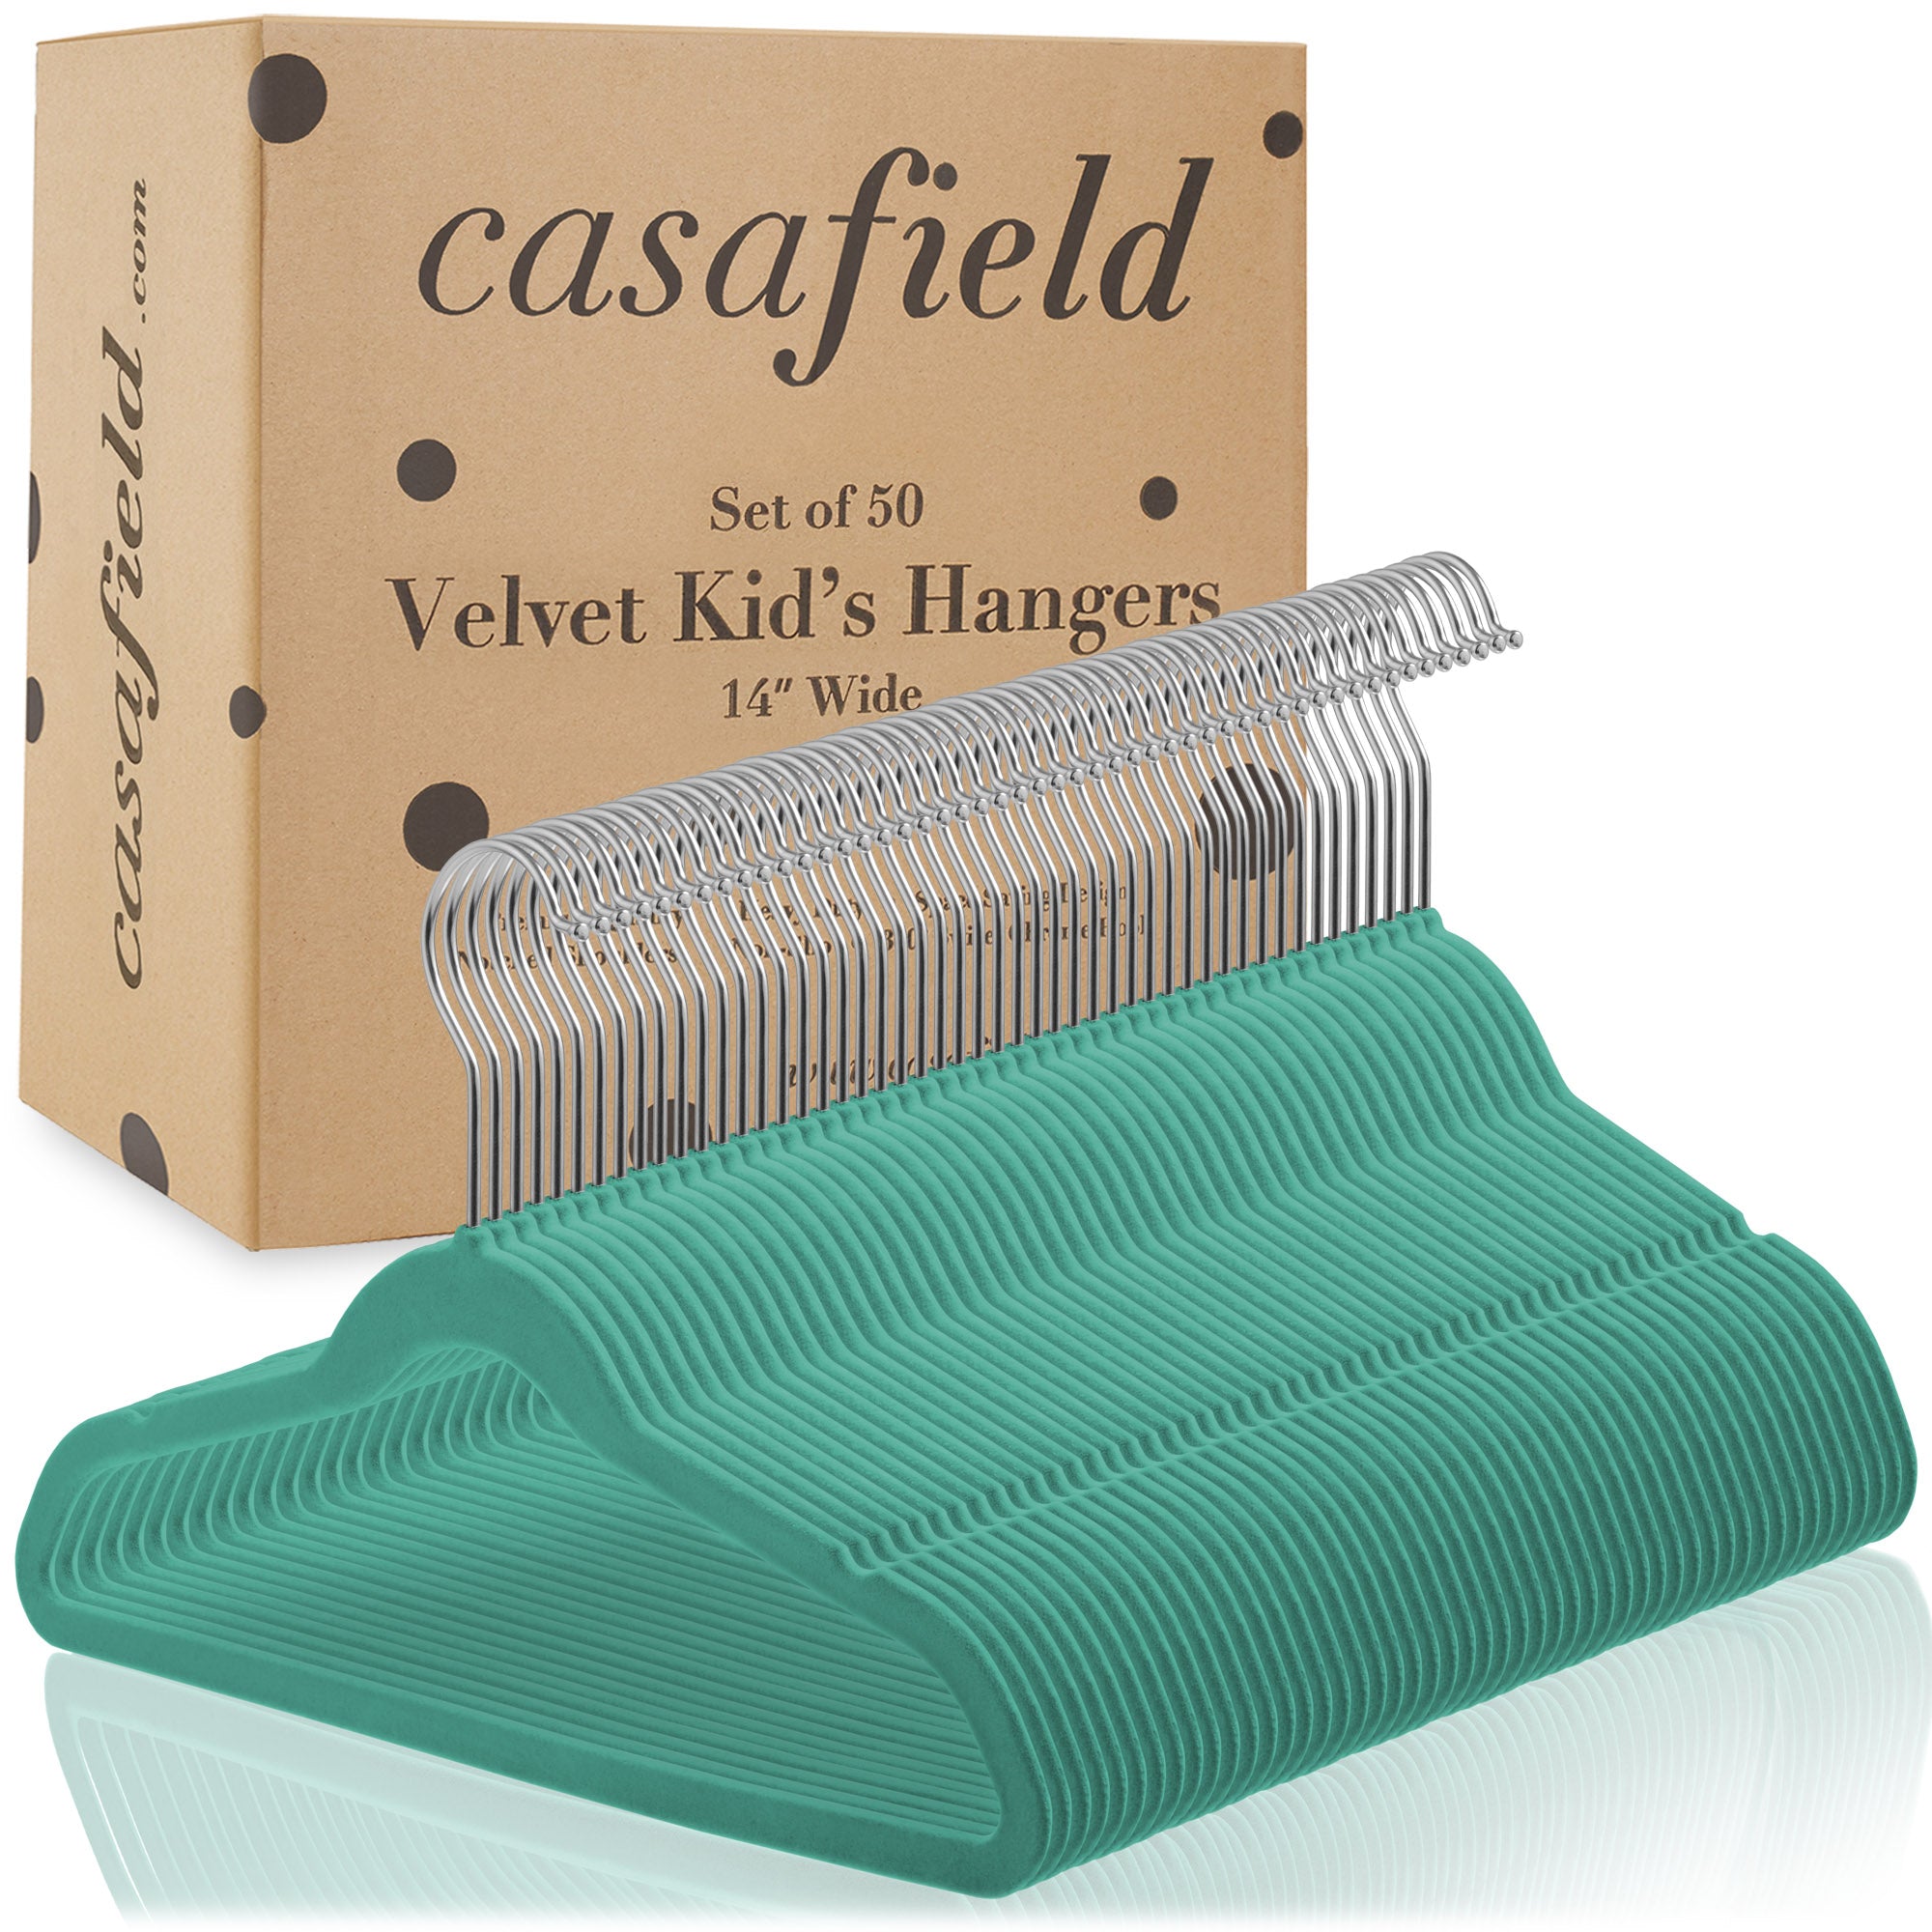 Casafield 50 Velvet Kid's Hangers - 14 Size for Children's Clothes - Teal